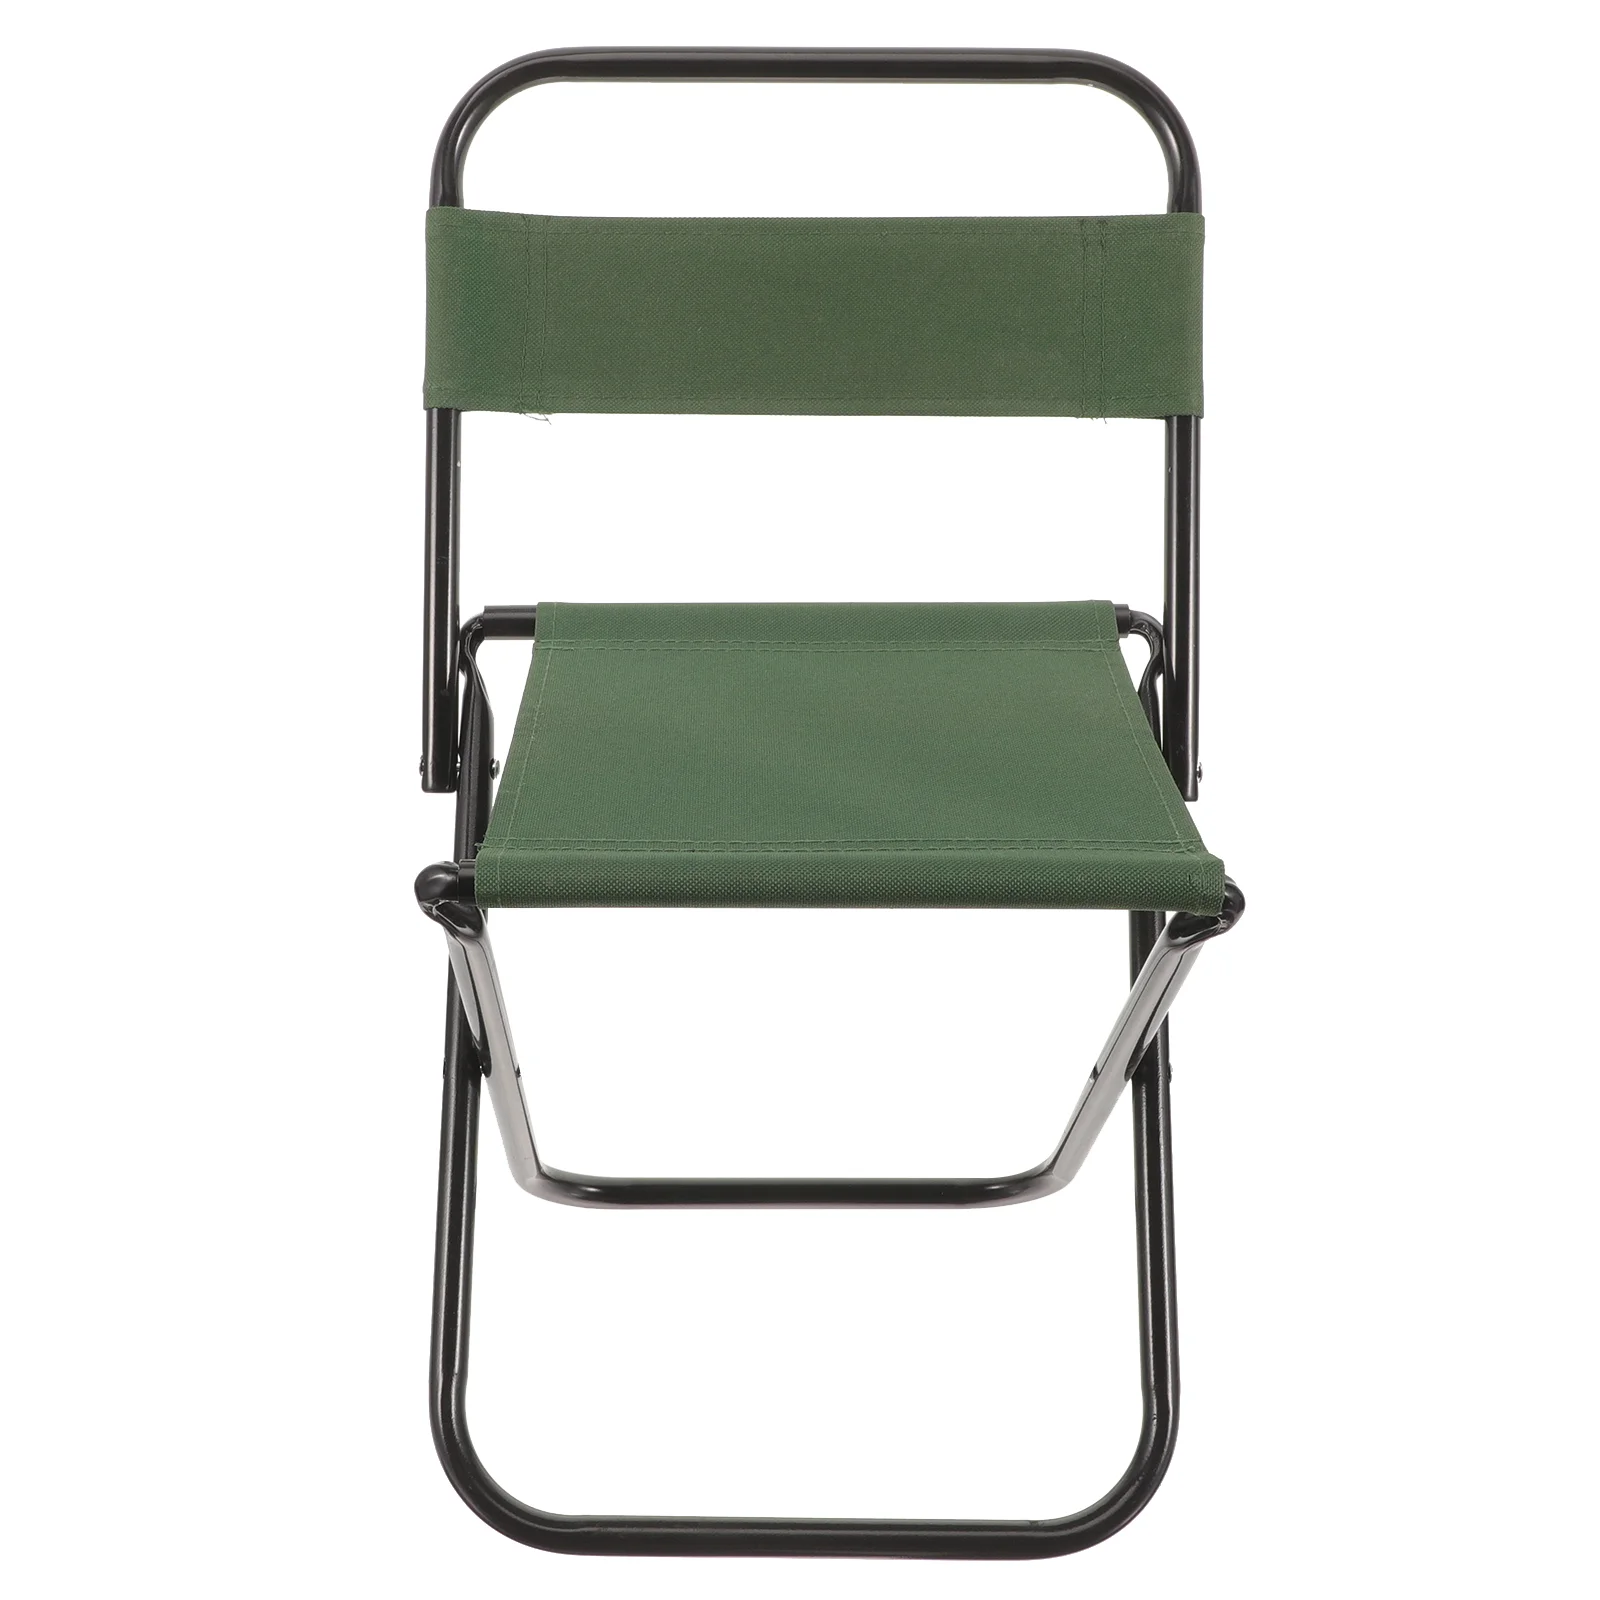 https://ae01.alicdn.com/kf/Sfc0aad1f1a5c4d8aadecdde0de6794c8u/Foldable-Chair-Folding-Portable-Chairs-Outdoor-Stools-Fishing-Camping-Metal-Adults-Heavy-Duty-Beach-Travel.jpg